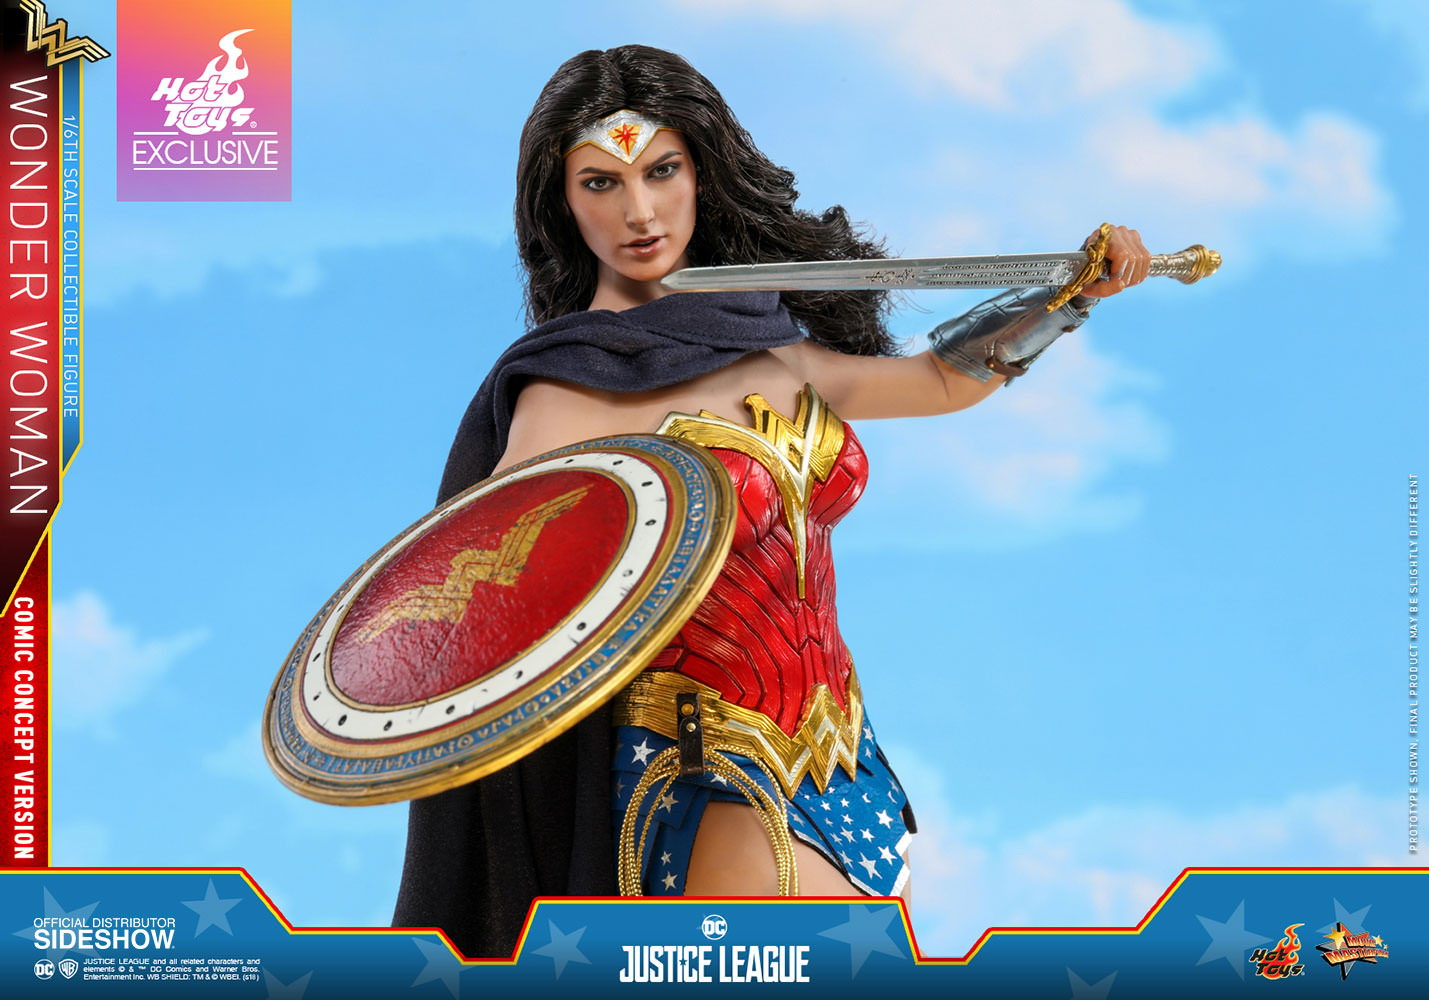 Wonder Woman Comic Concept Version Exclusive Edition (Prototype Shown) View 8